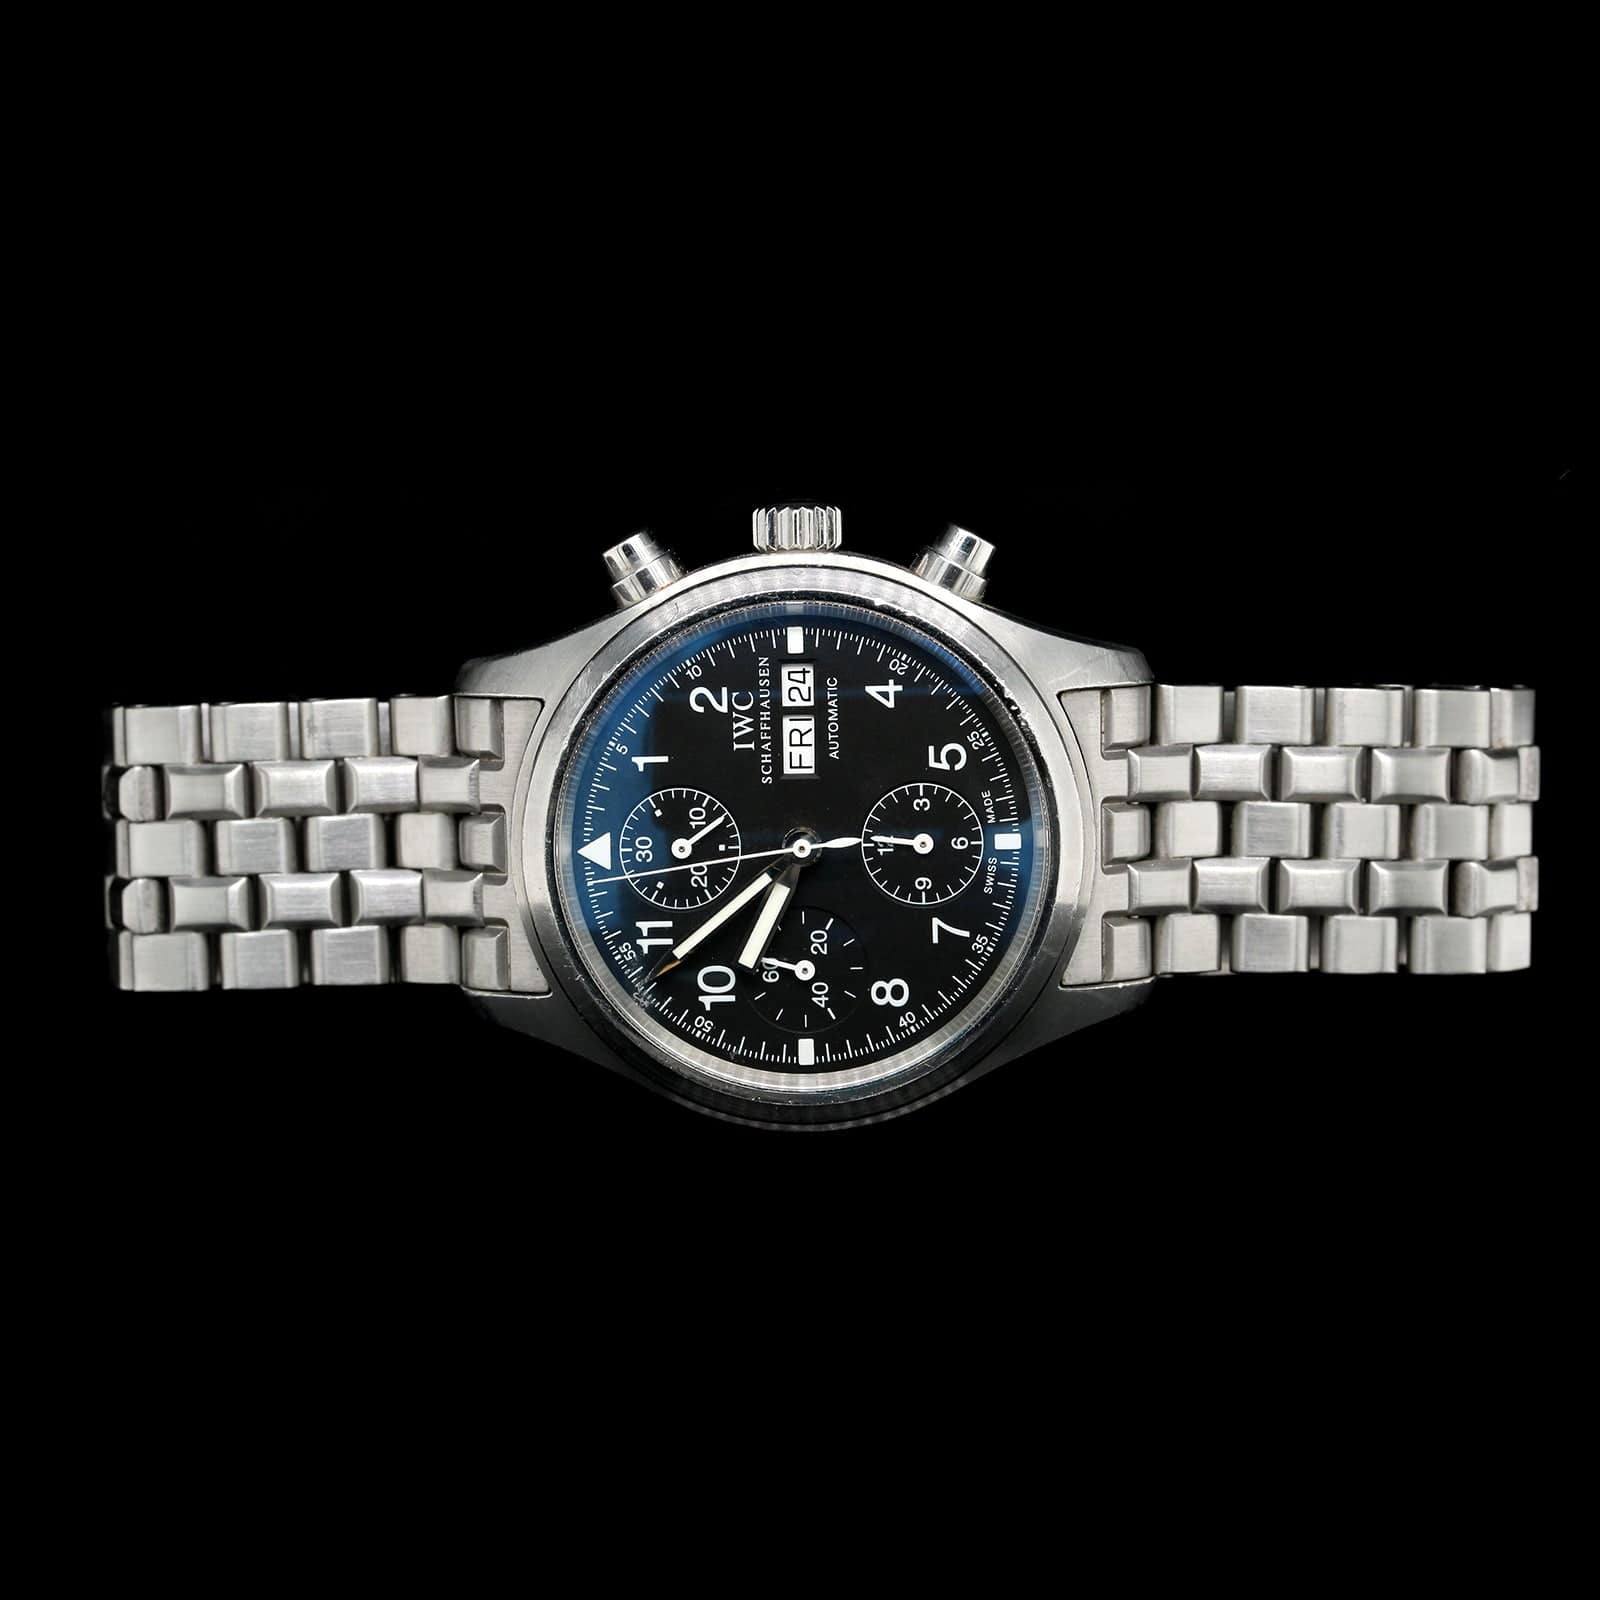 IWC Estate Steel Fliegeruhr Chronoghraph Wristwatch